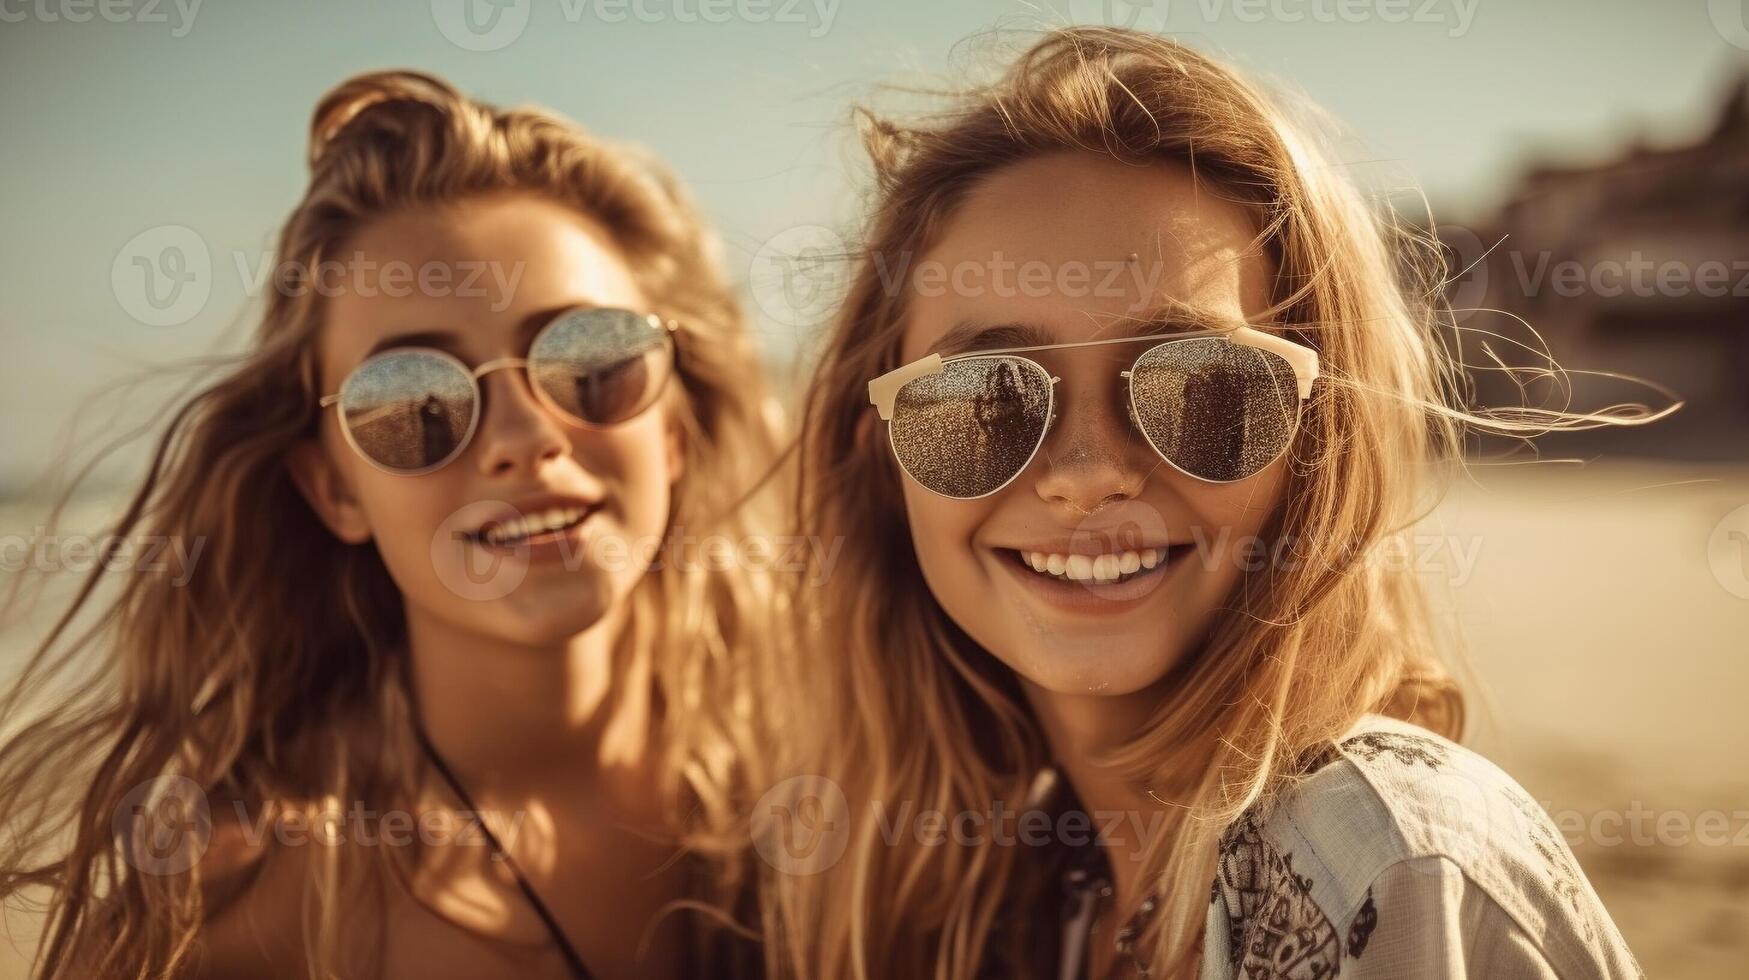 Two Young Girlfriends Posing Wearing Sunglasses Having Fun on the Beach - Generatvie AI. photo